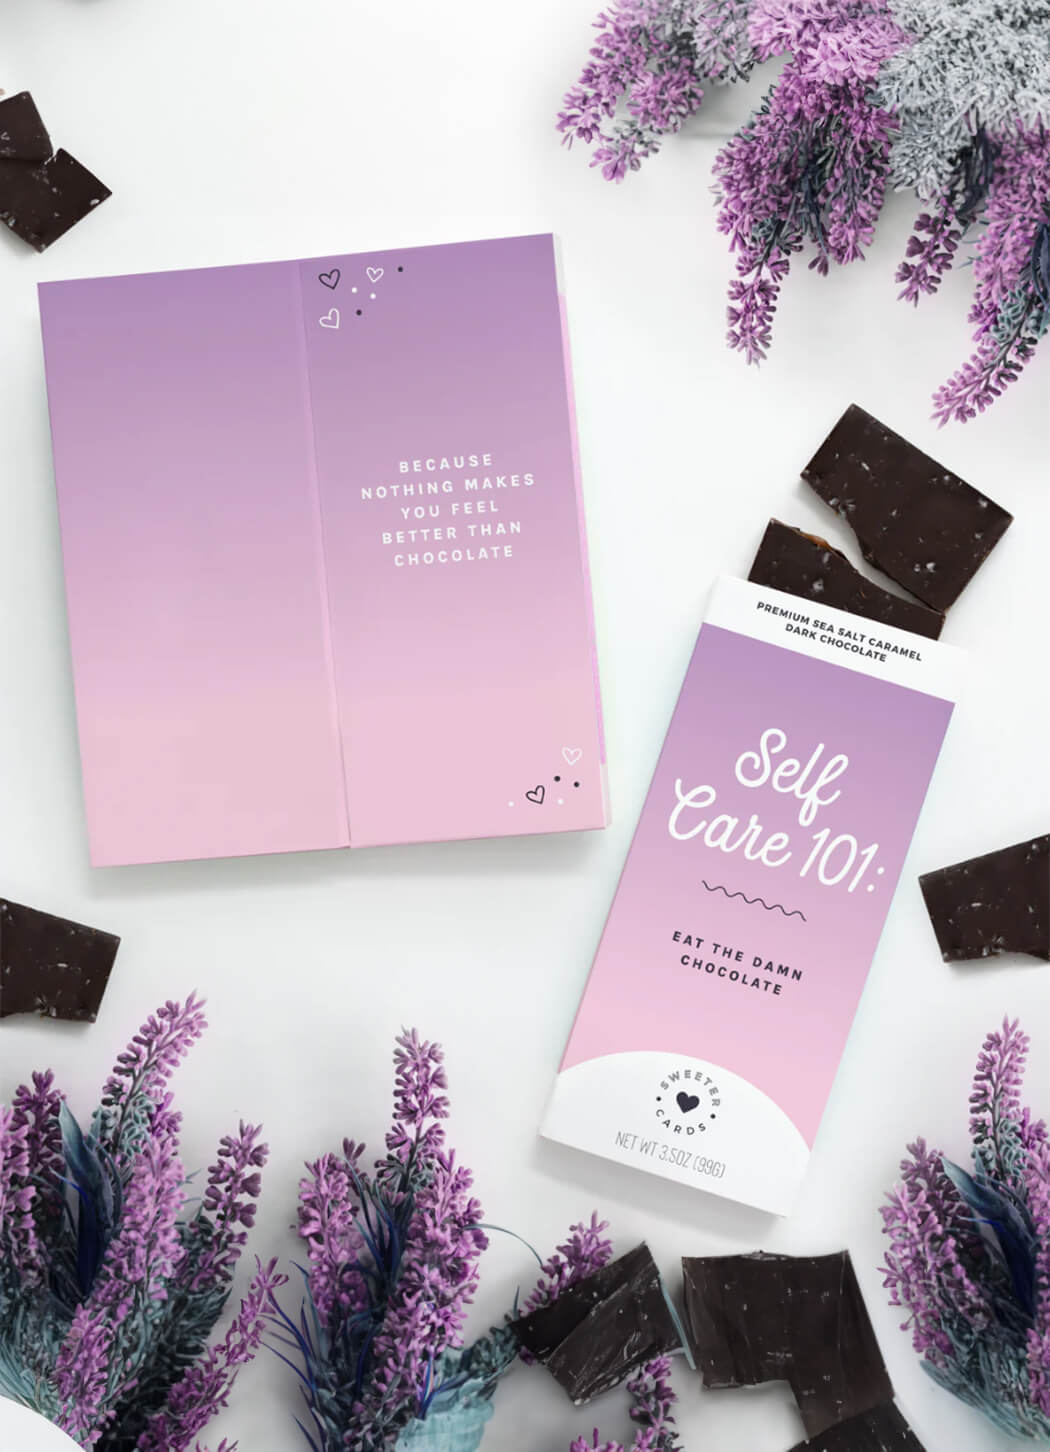 Sweeter Cards "Self Care 101" Chocolate-Bar Greeting Card